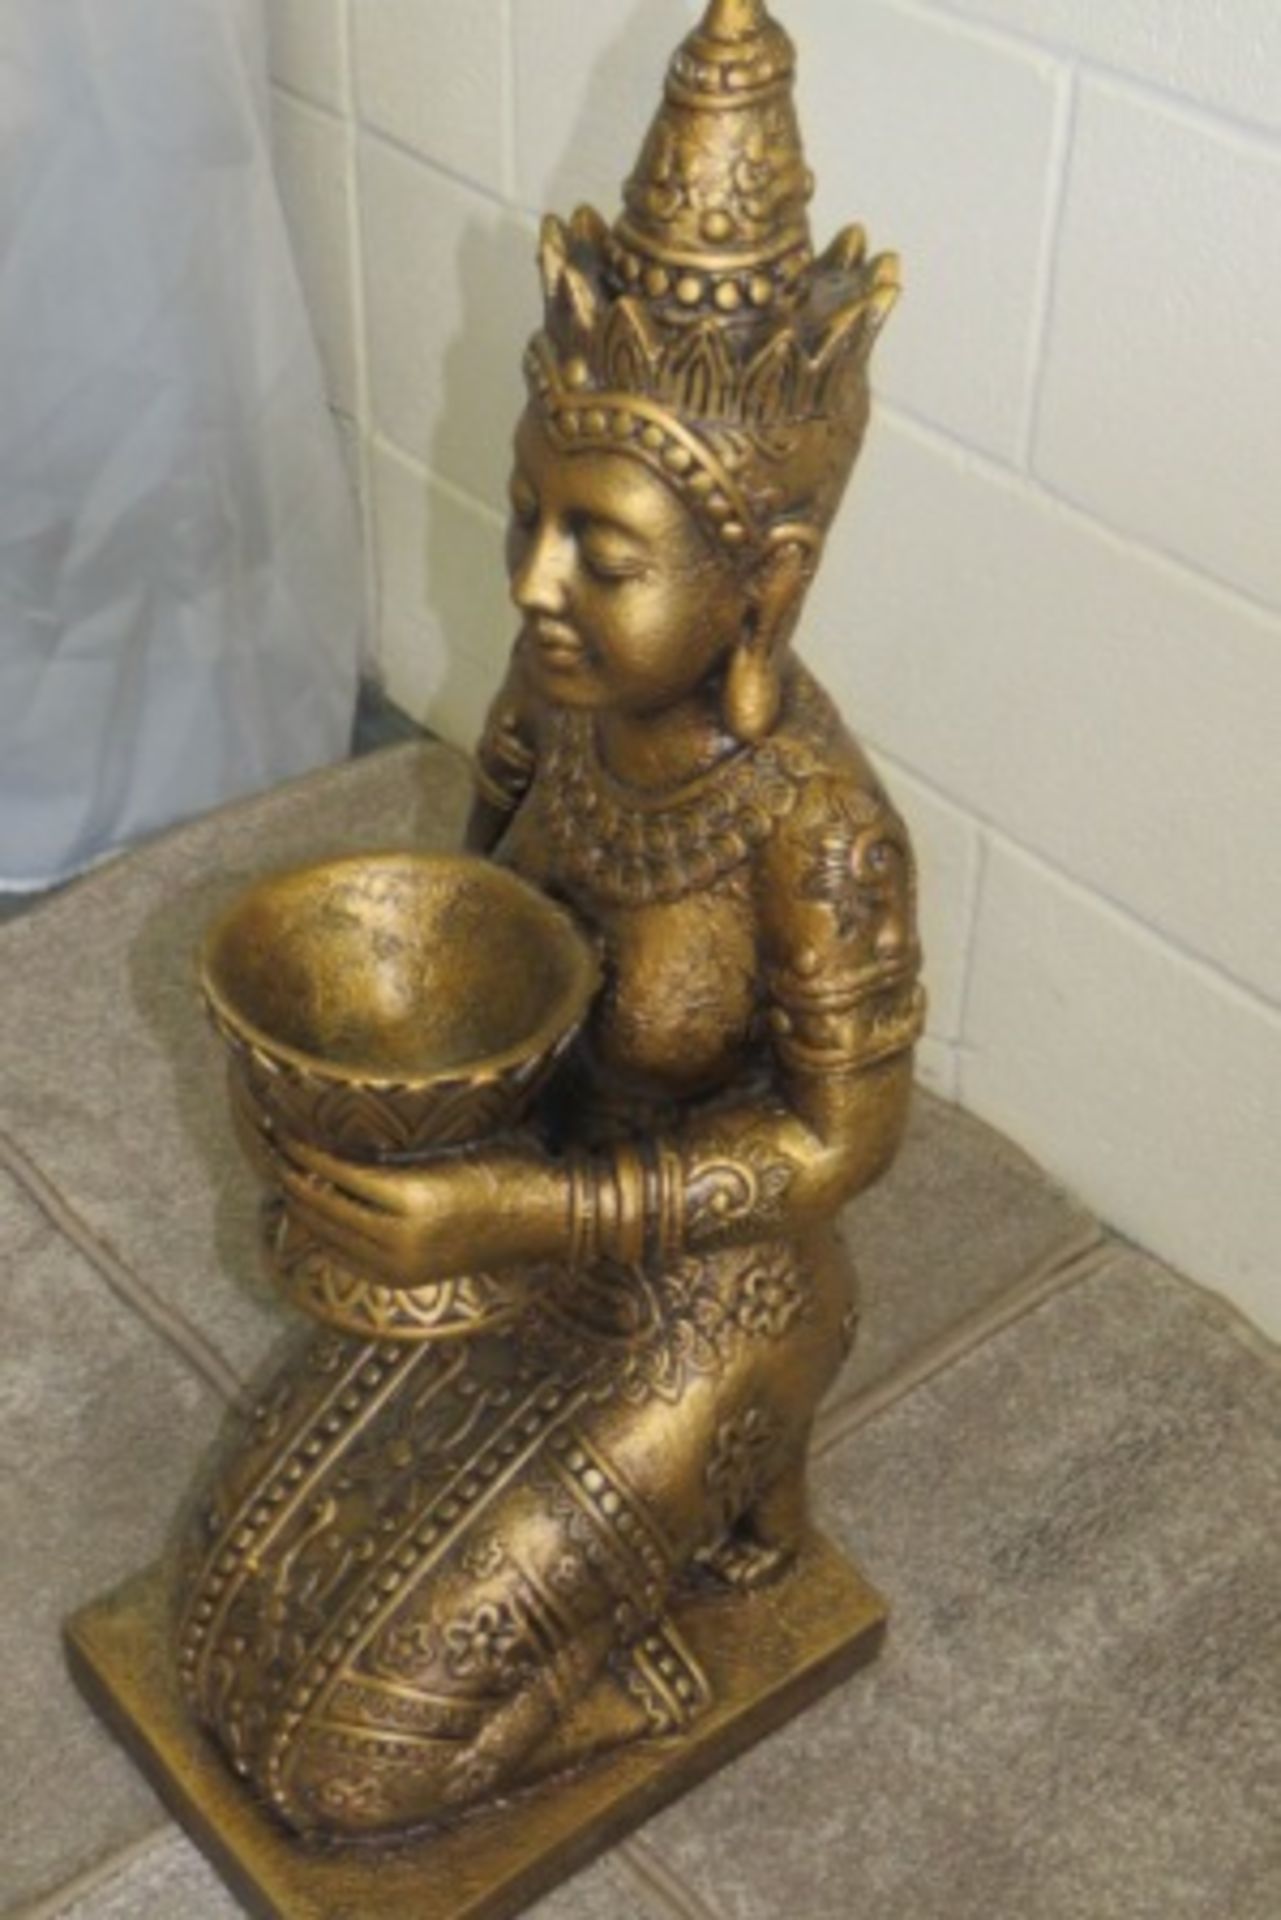 Oriental Priestess Statuette - 3 Feet Tall - Image 2 of 4